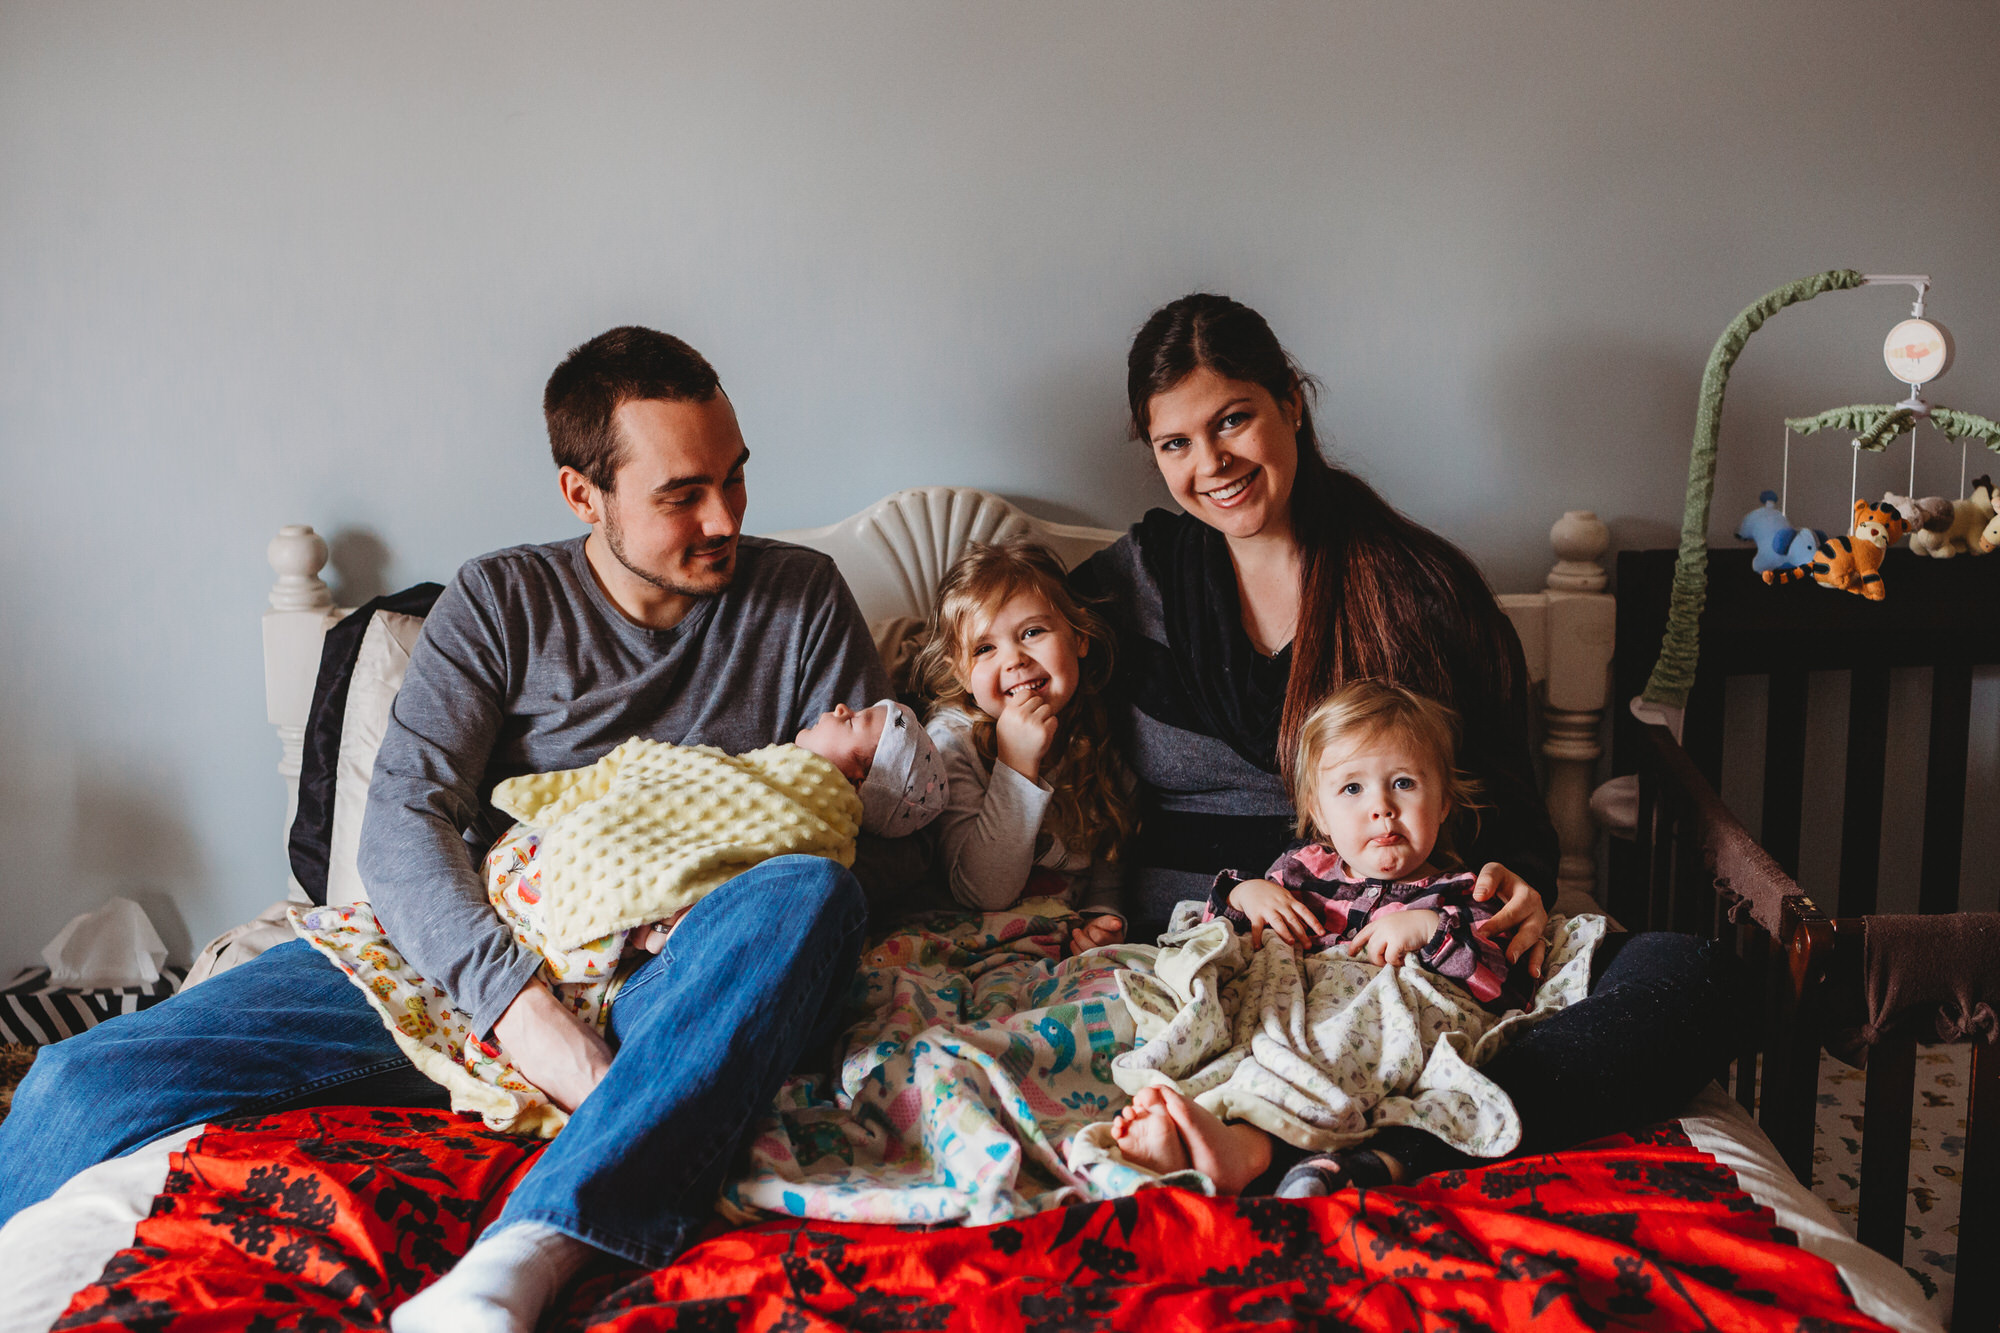 Tillsonburg Family Photographer - the whole family on the bed